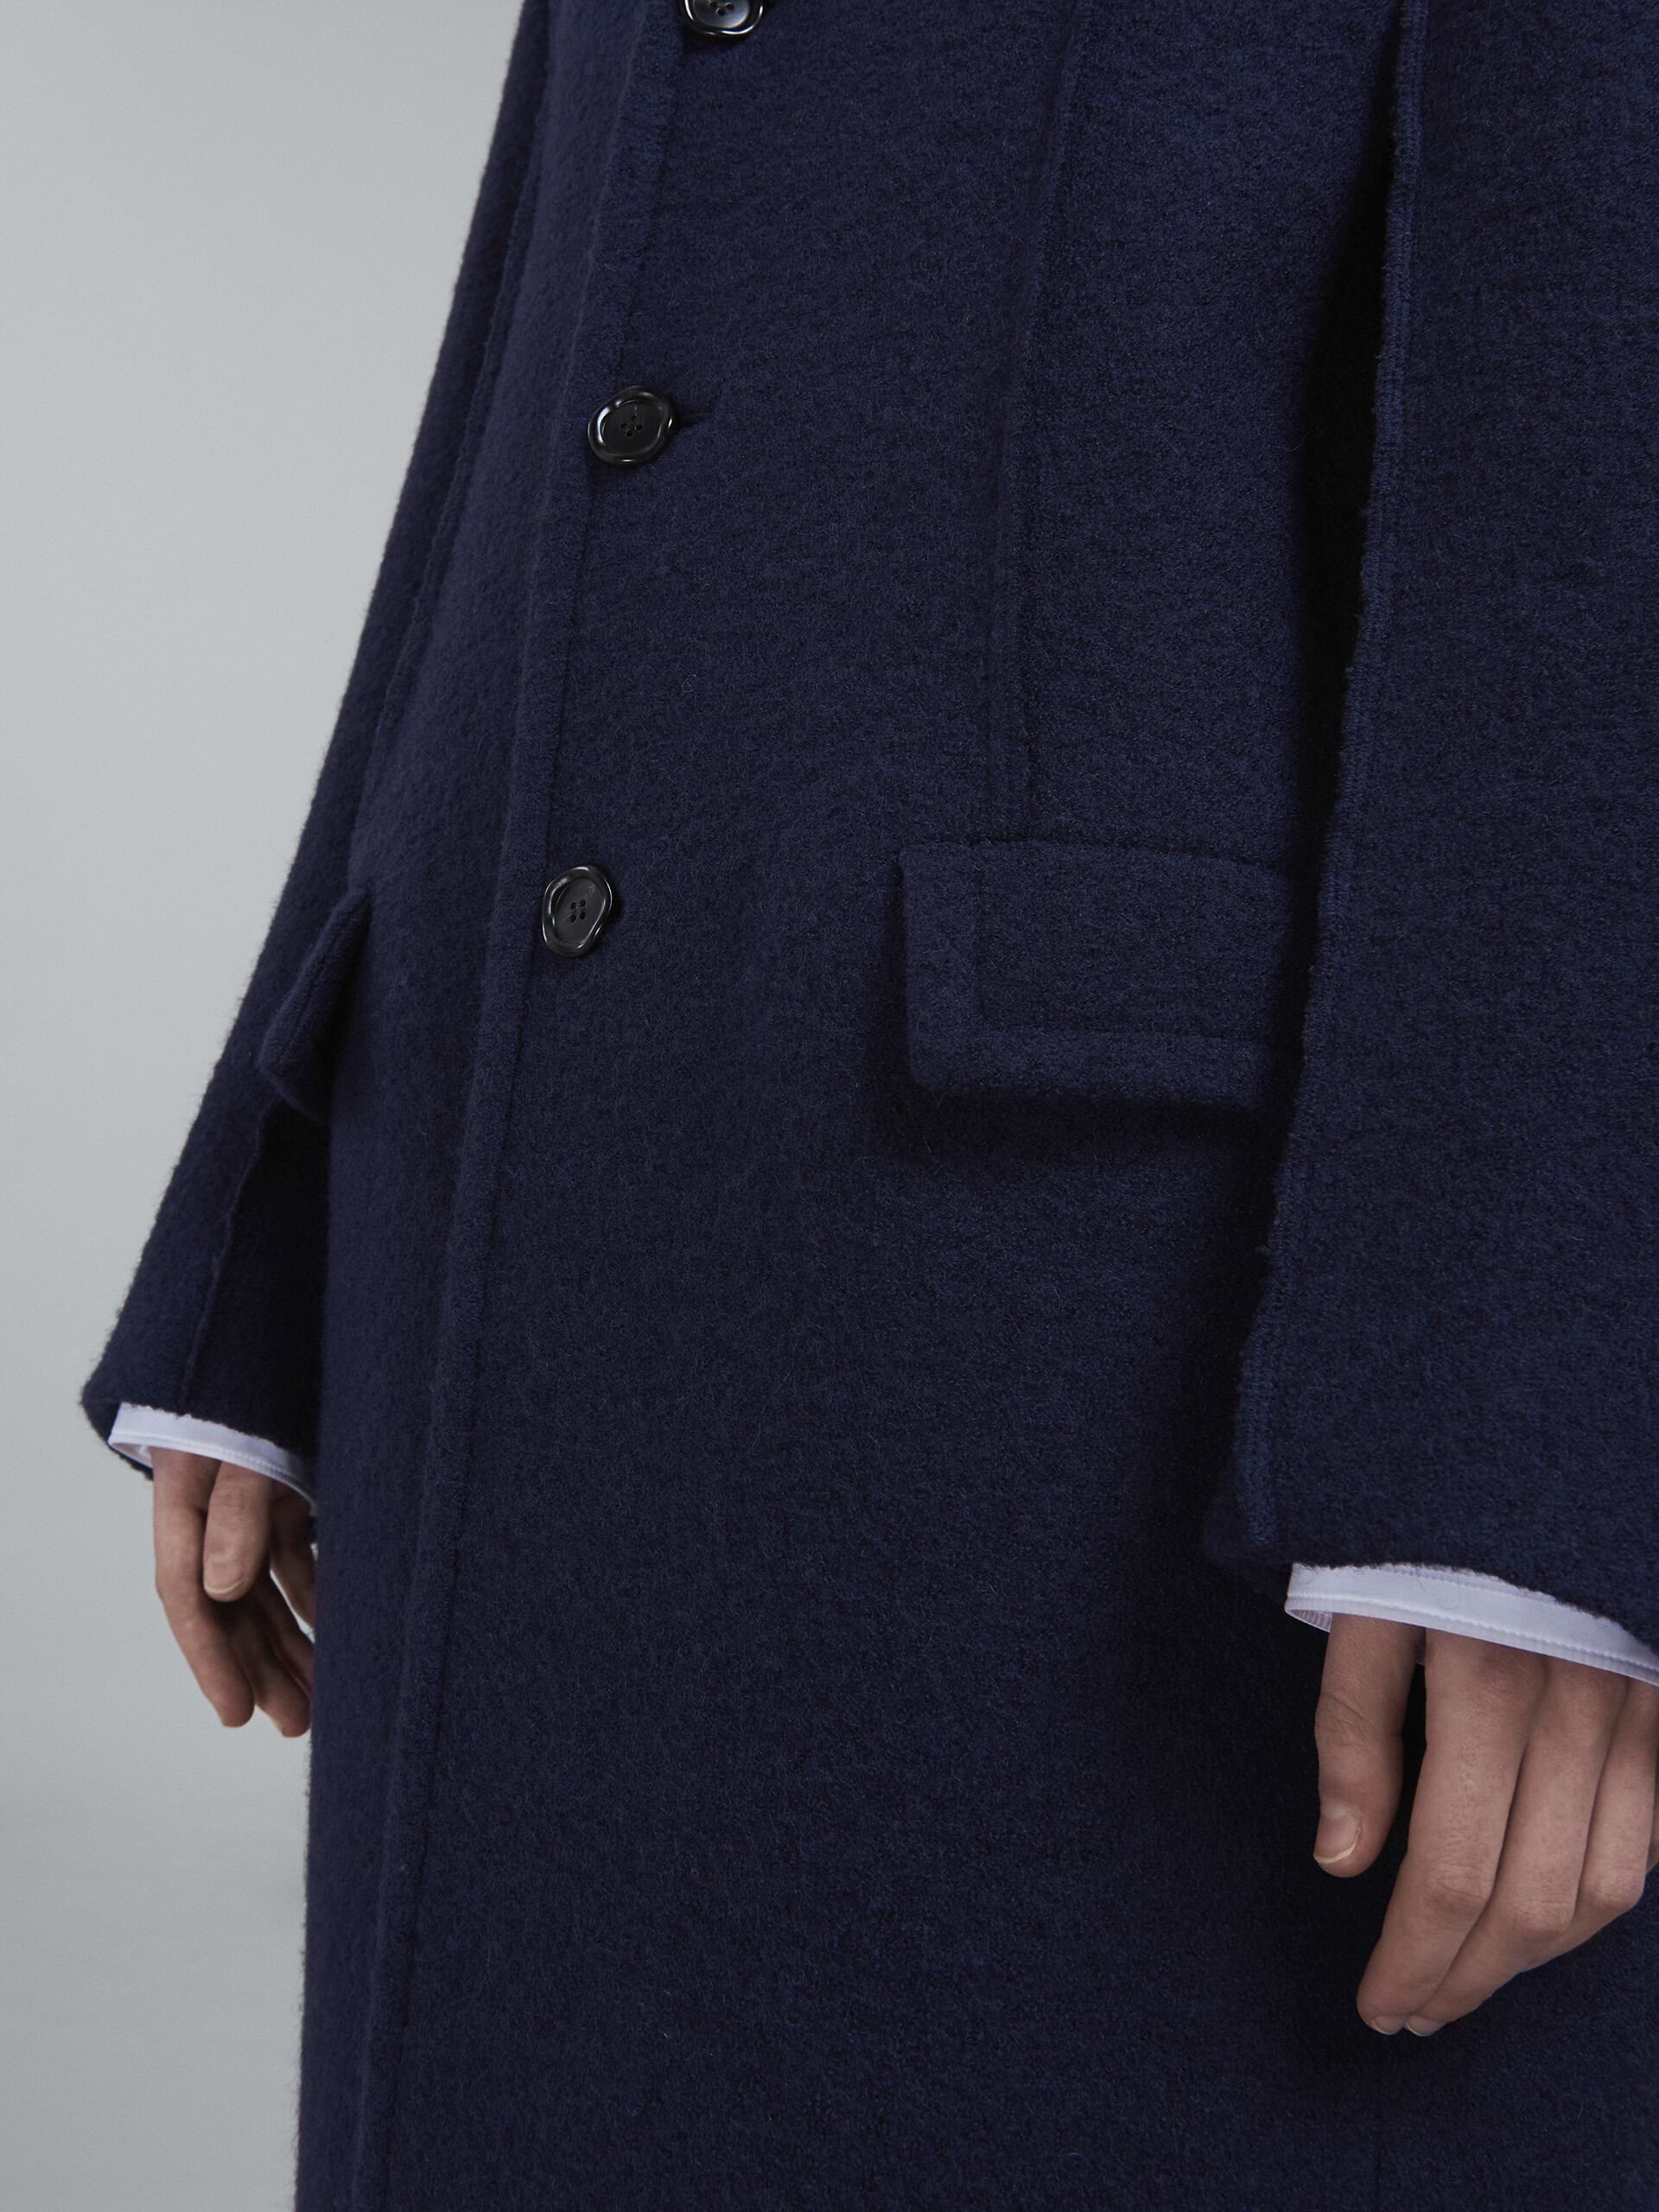 Bouclé wool coat - Coat - Image 5